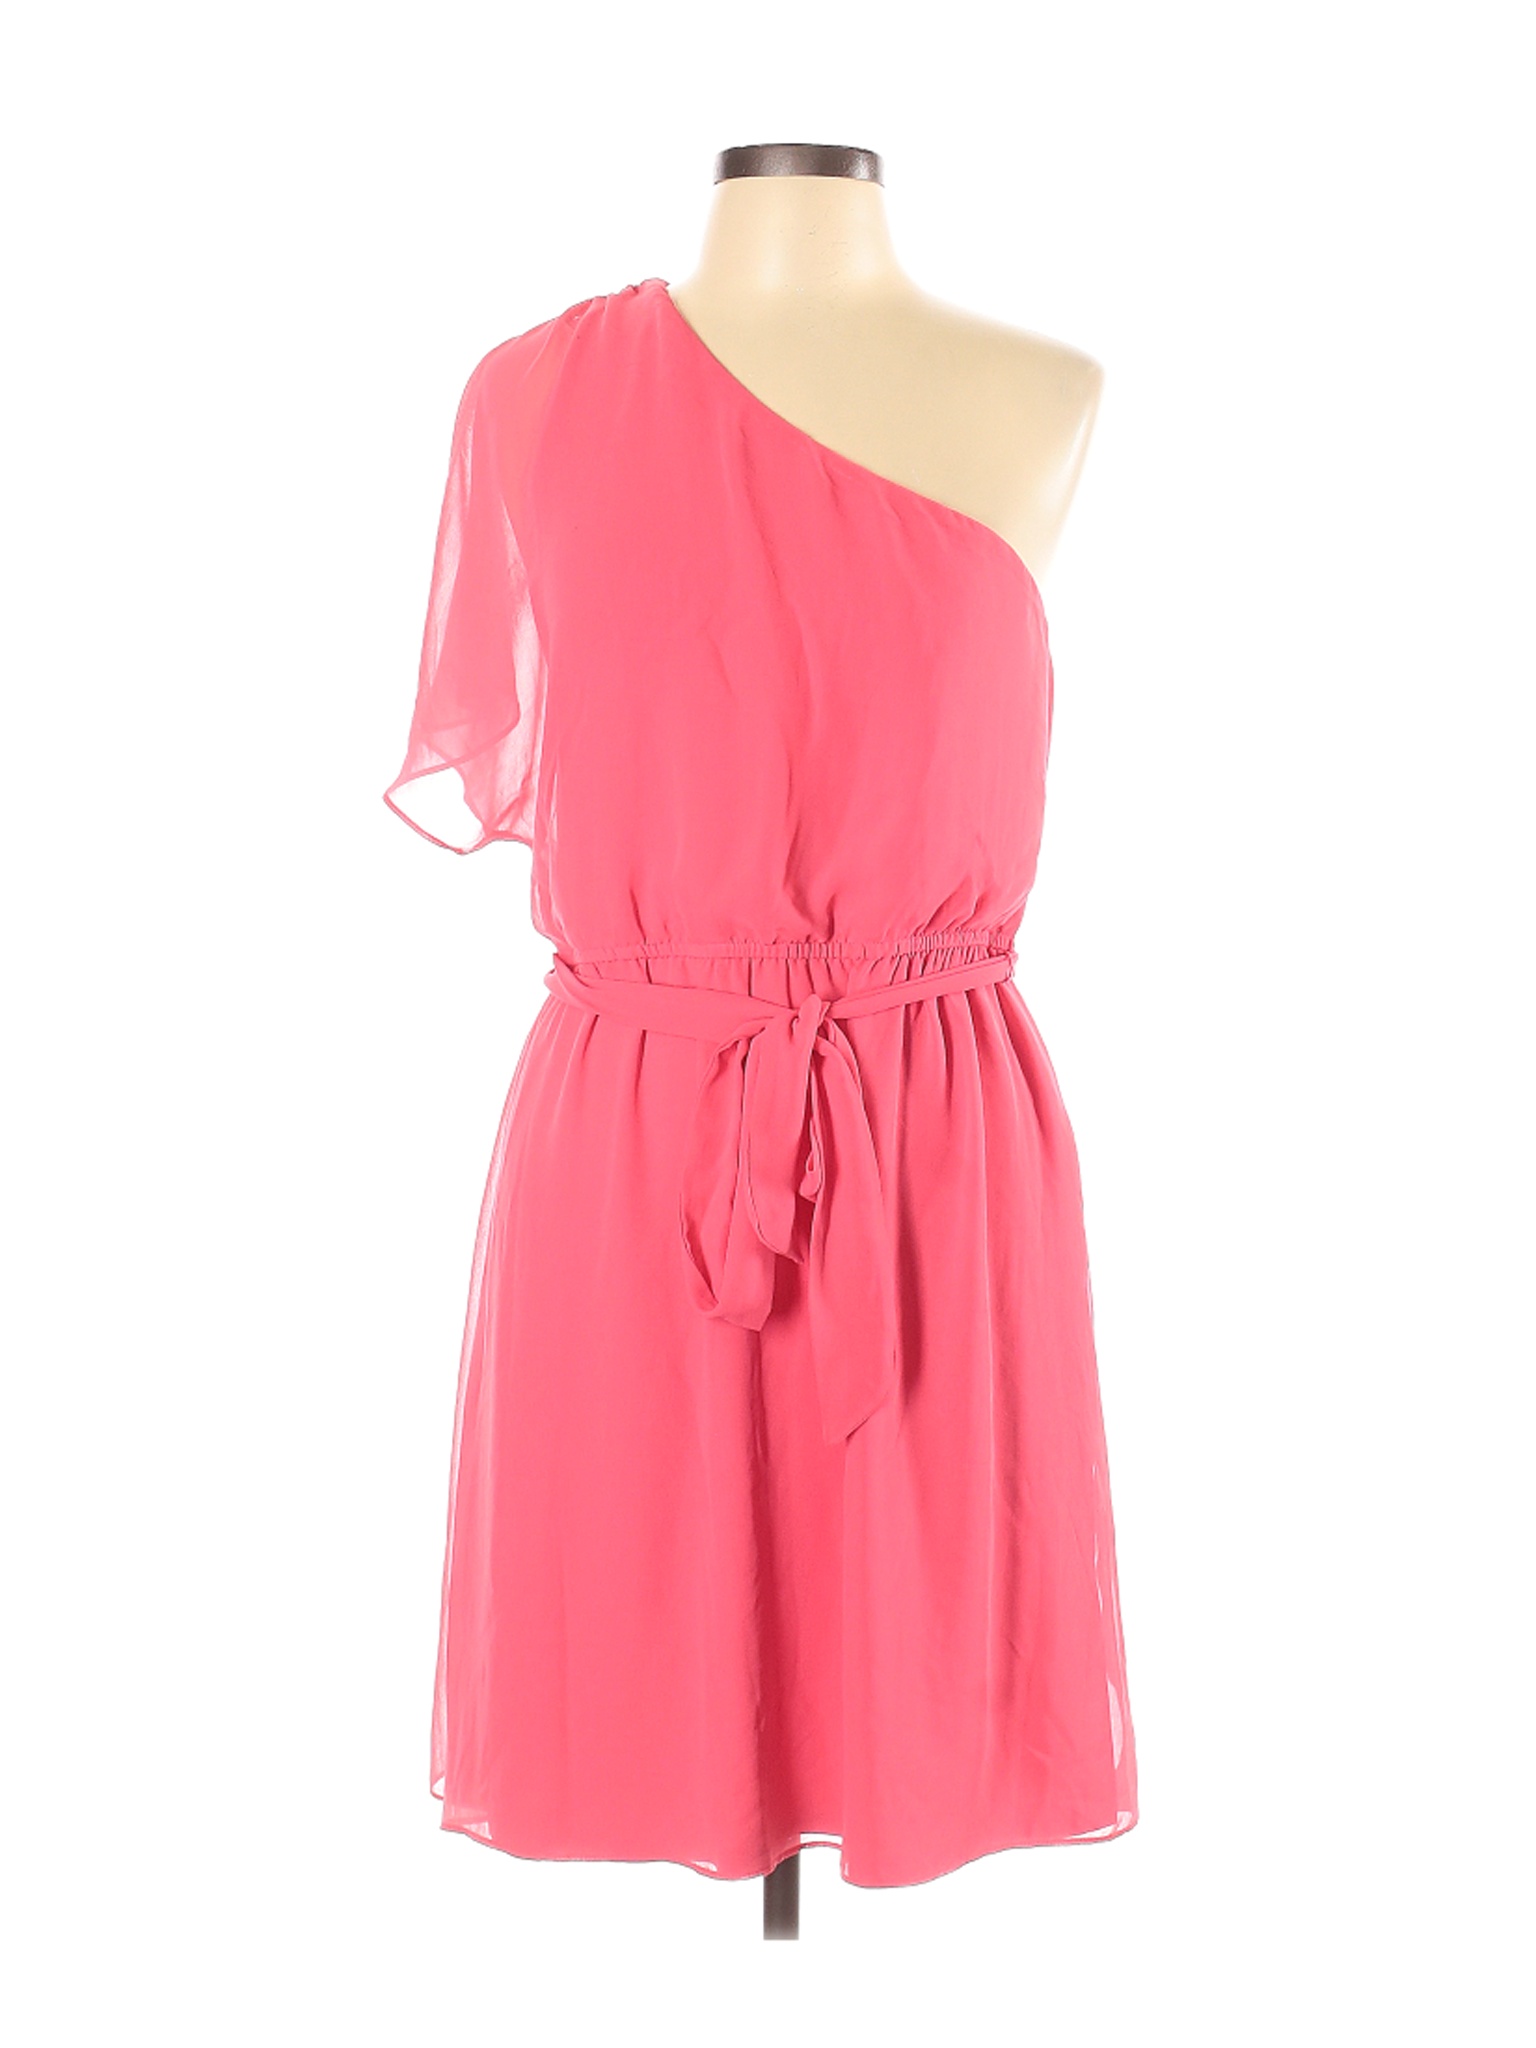 Express Women Pink Casual Dress L | eBay